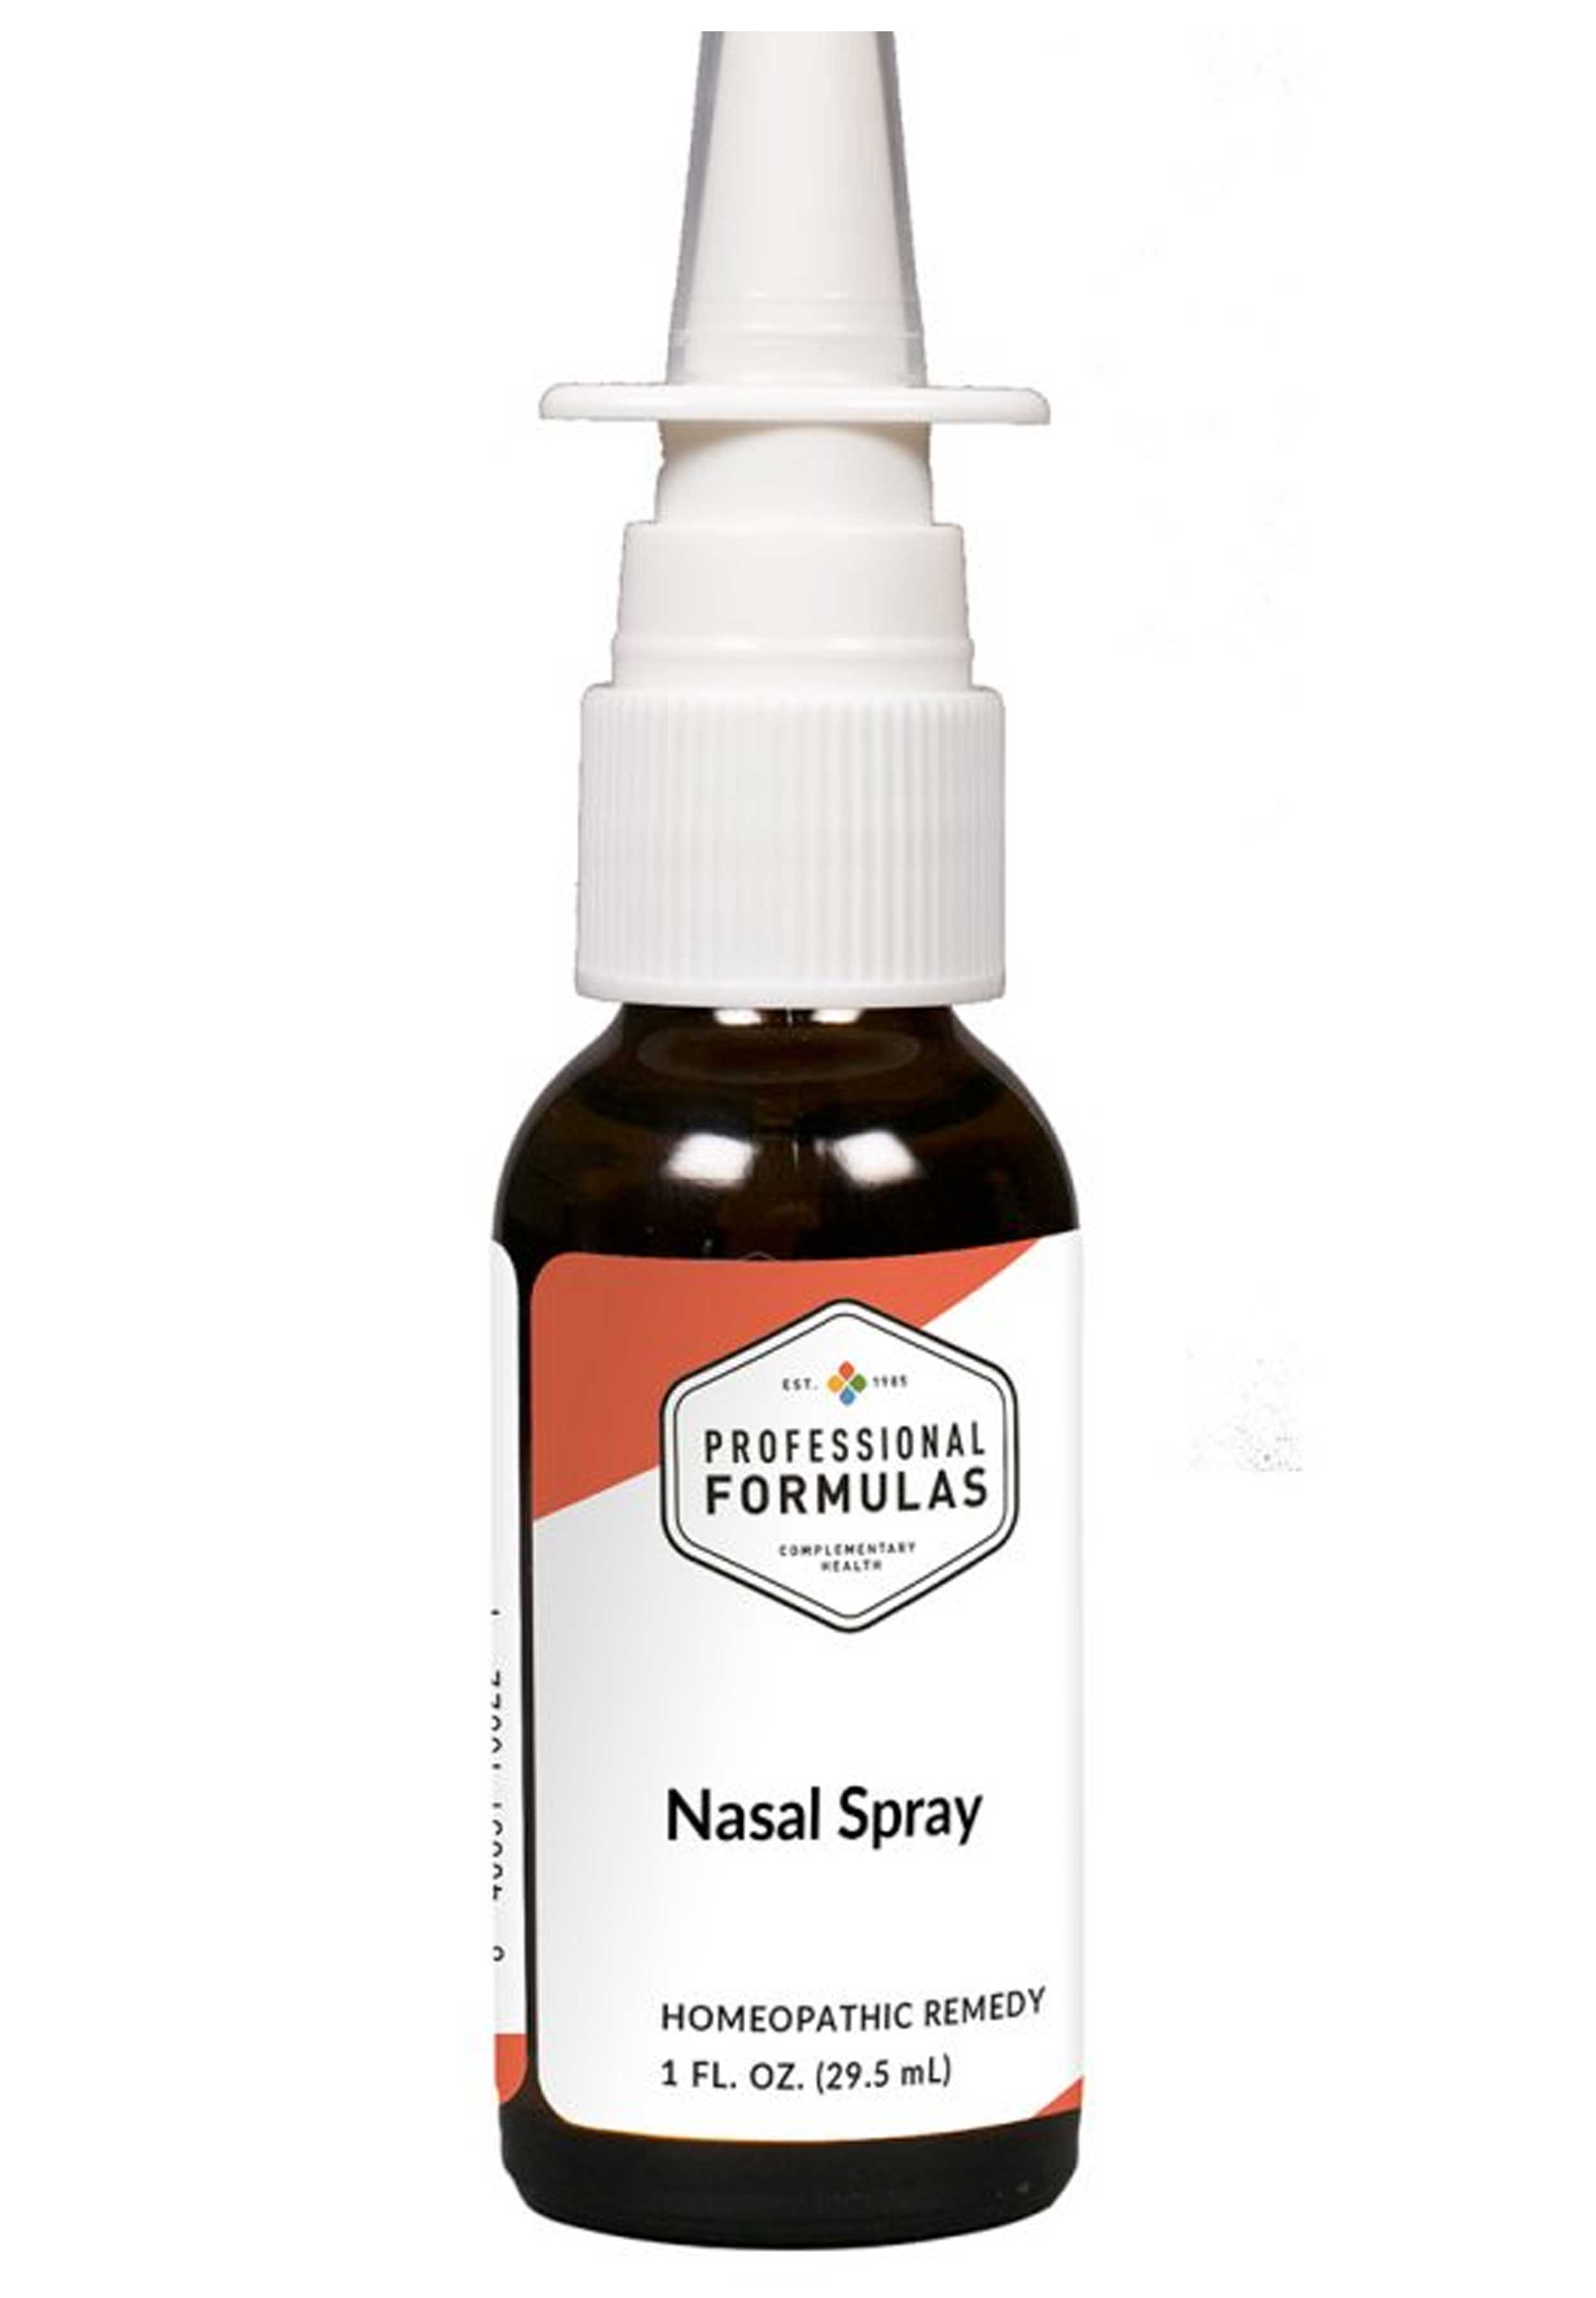 Professional Formulas Nasal Spray